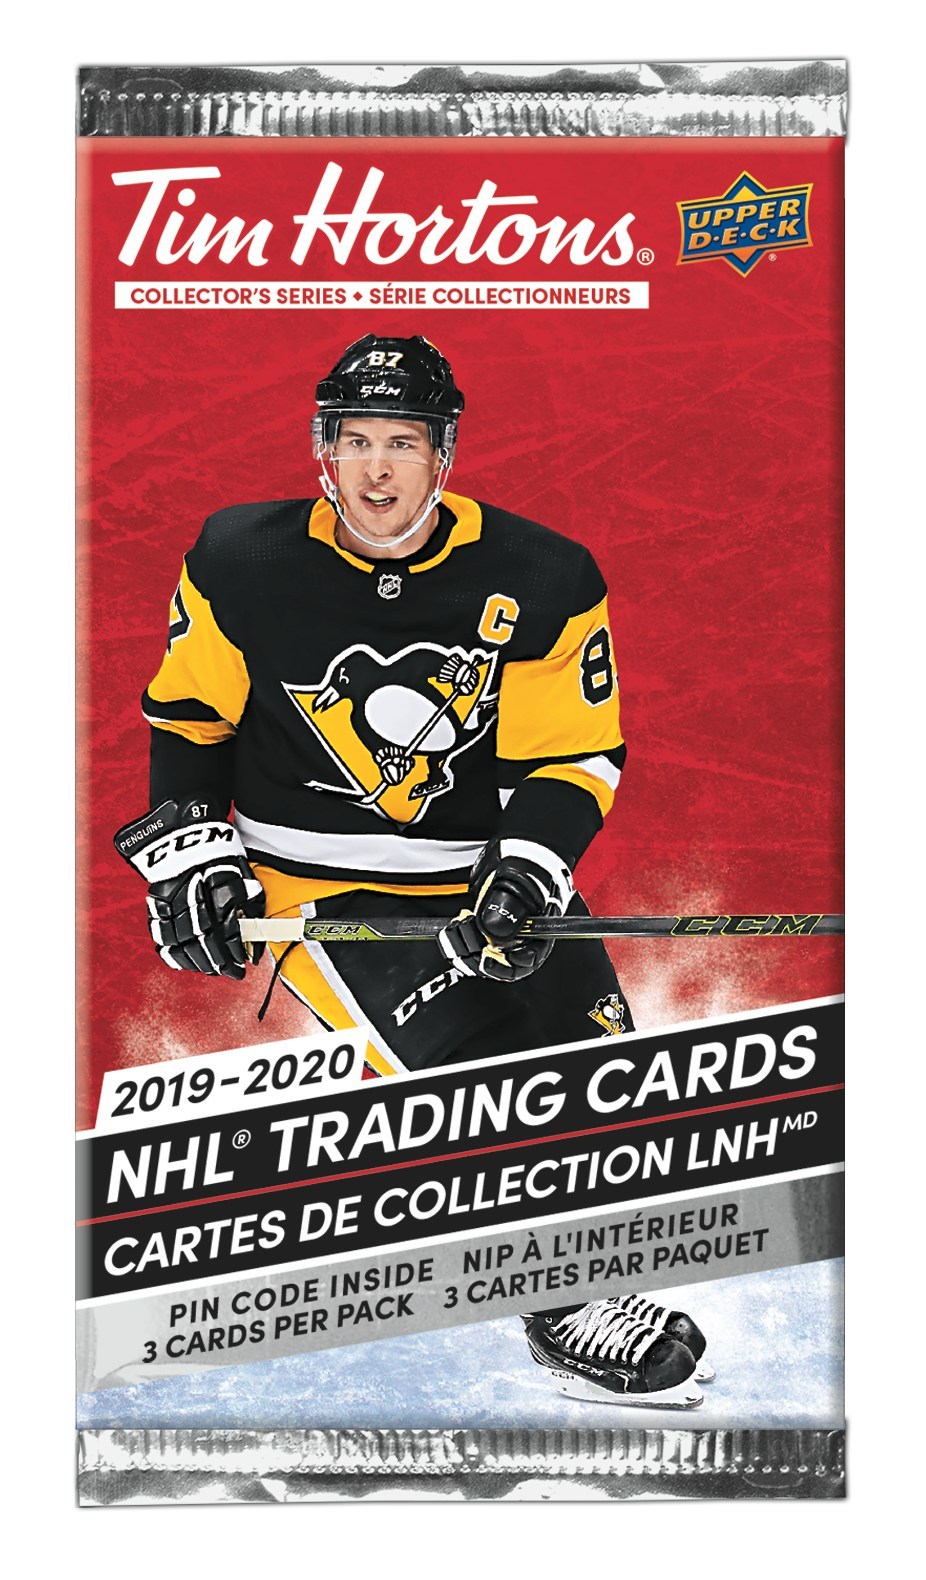 NHL Trading Cards Return To Tim Hortons 